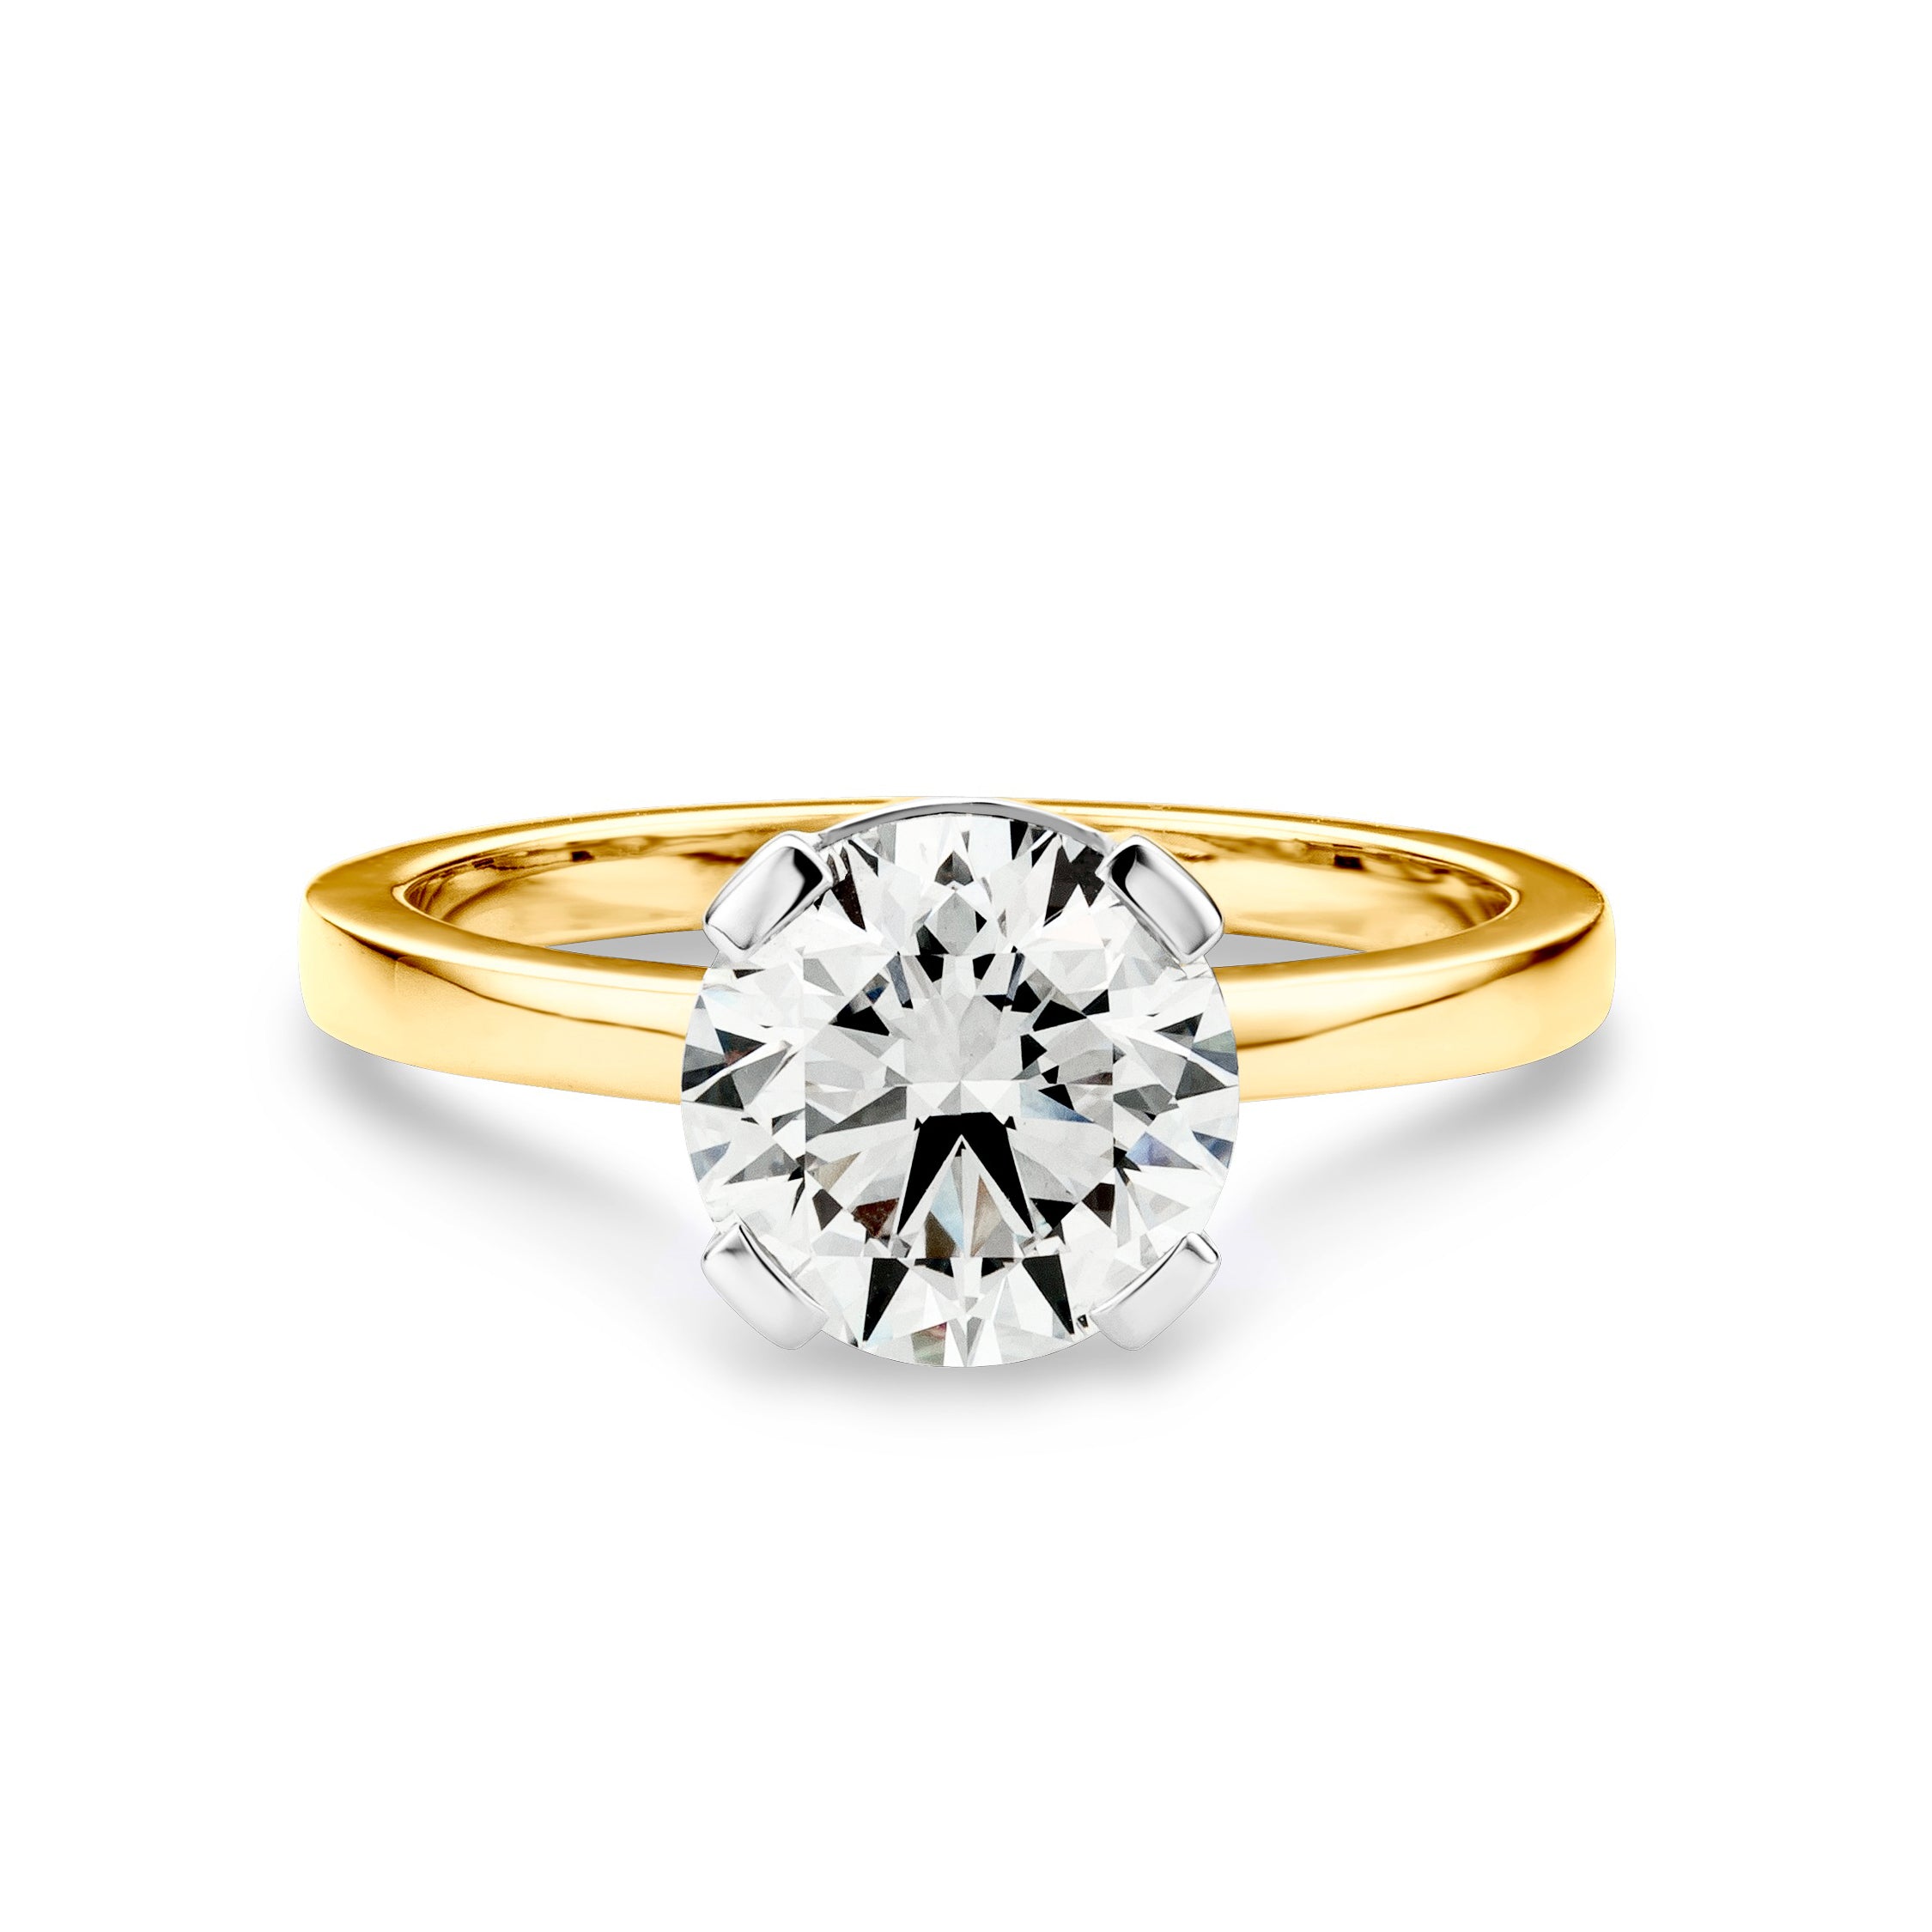 10k Yellow Gold Diamond Apple Ring Size 6.75 | eBay